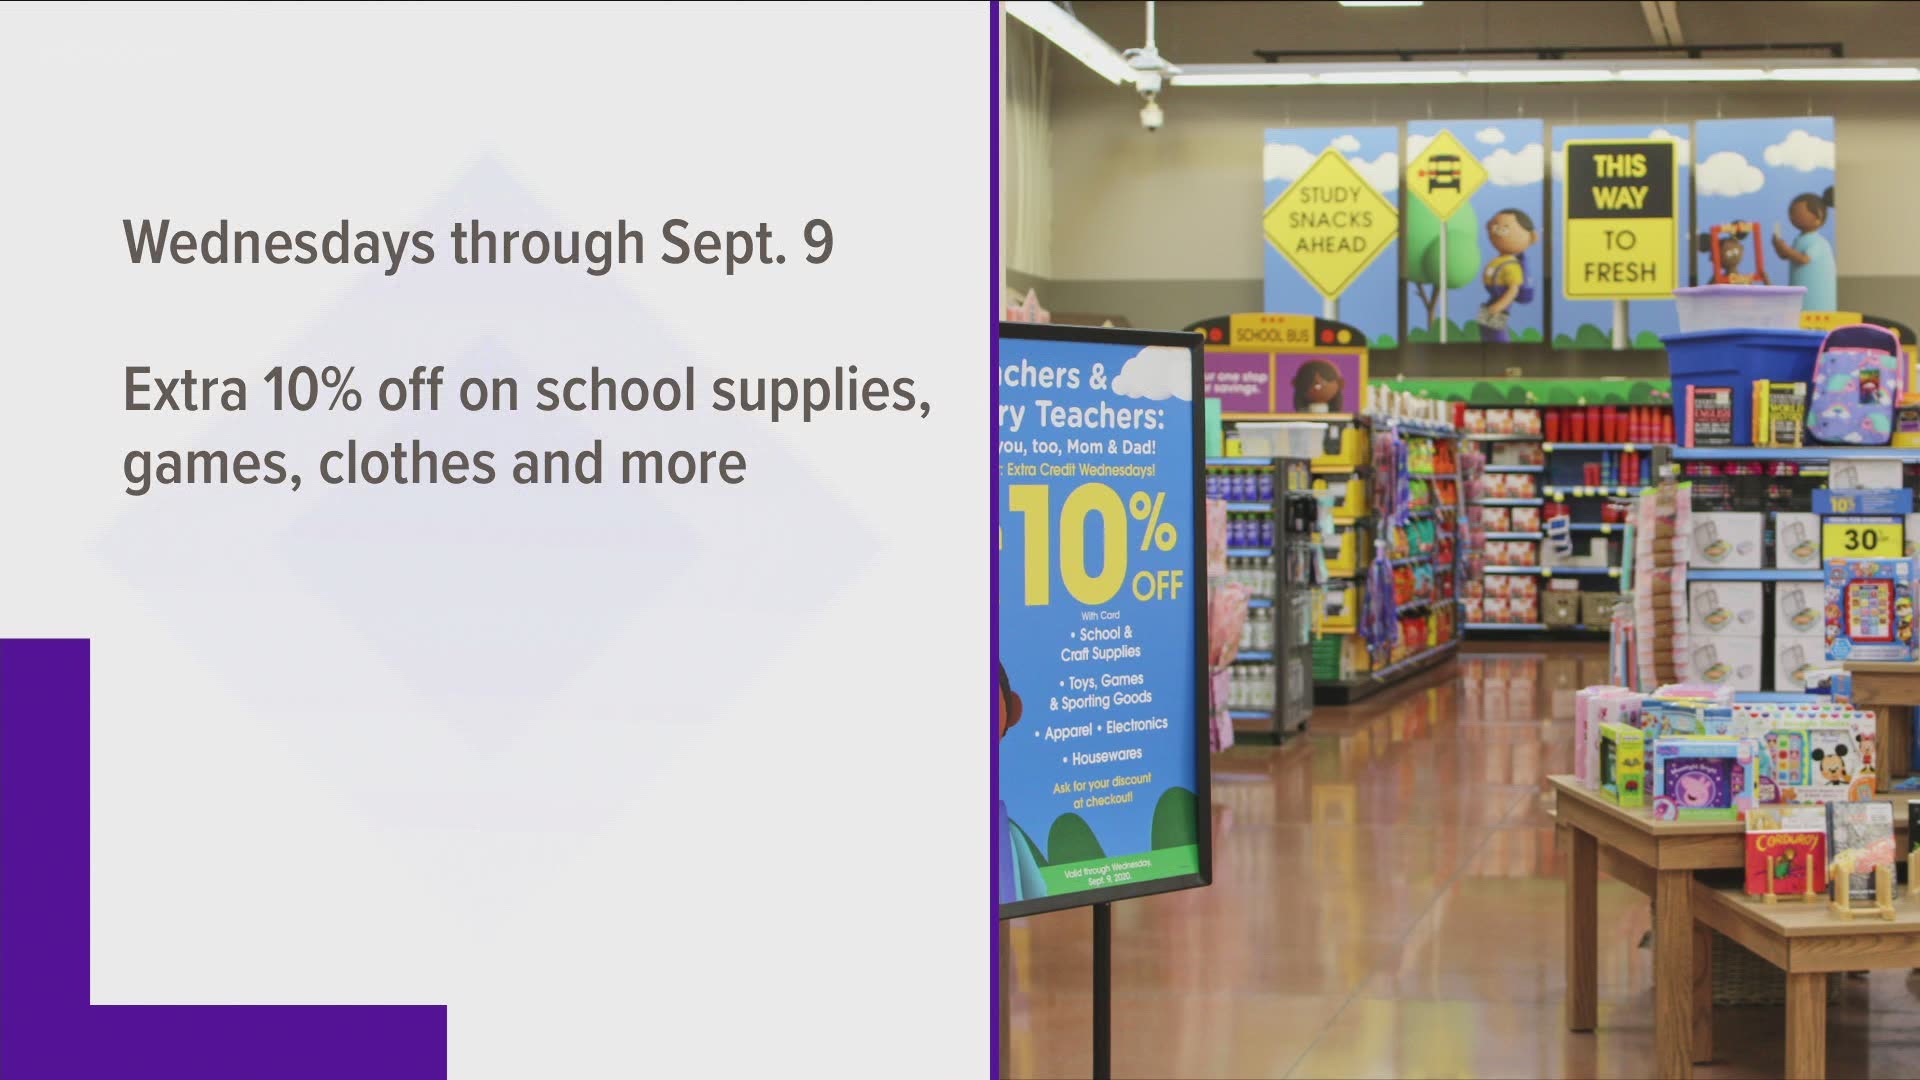 School supplies discounts for teachers